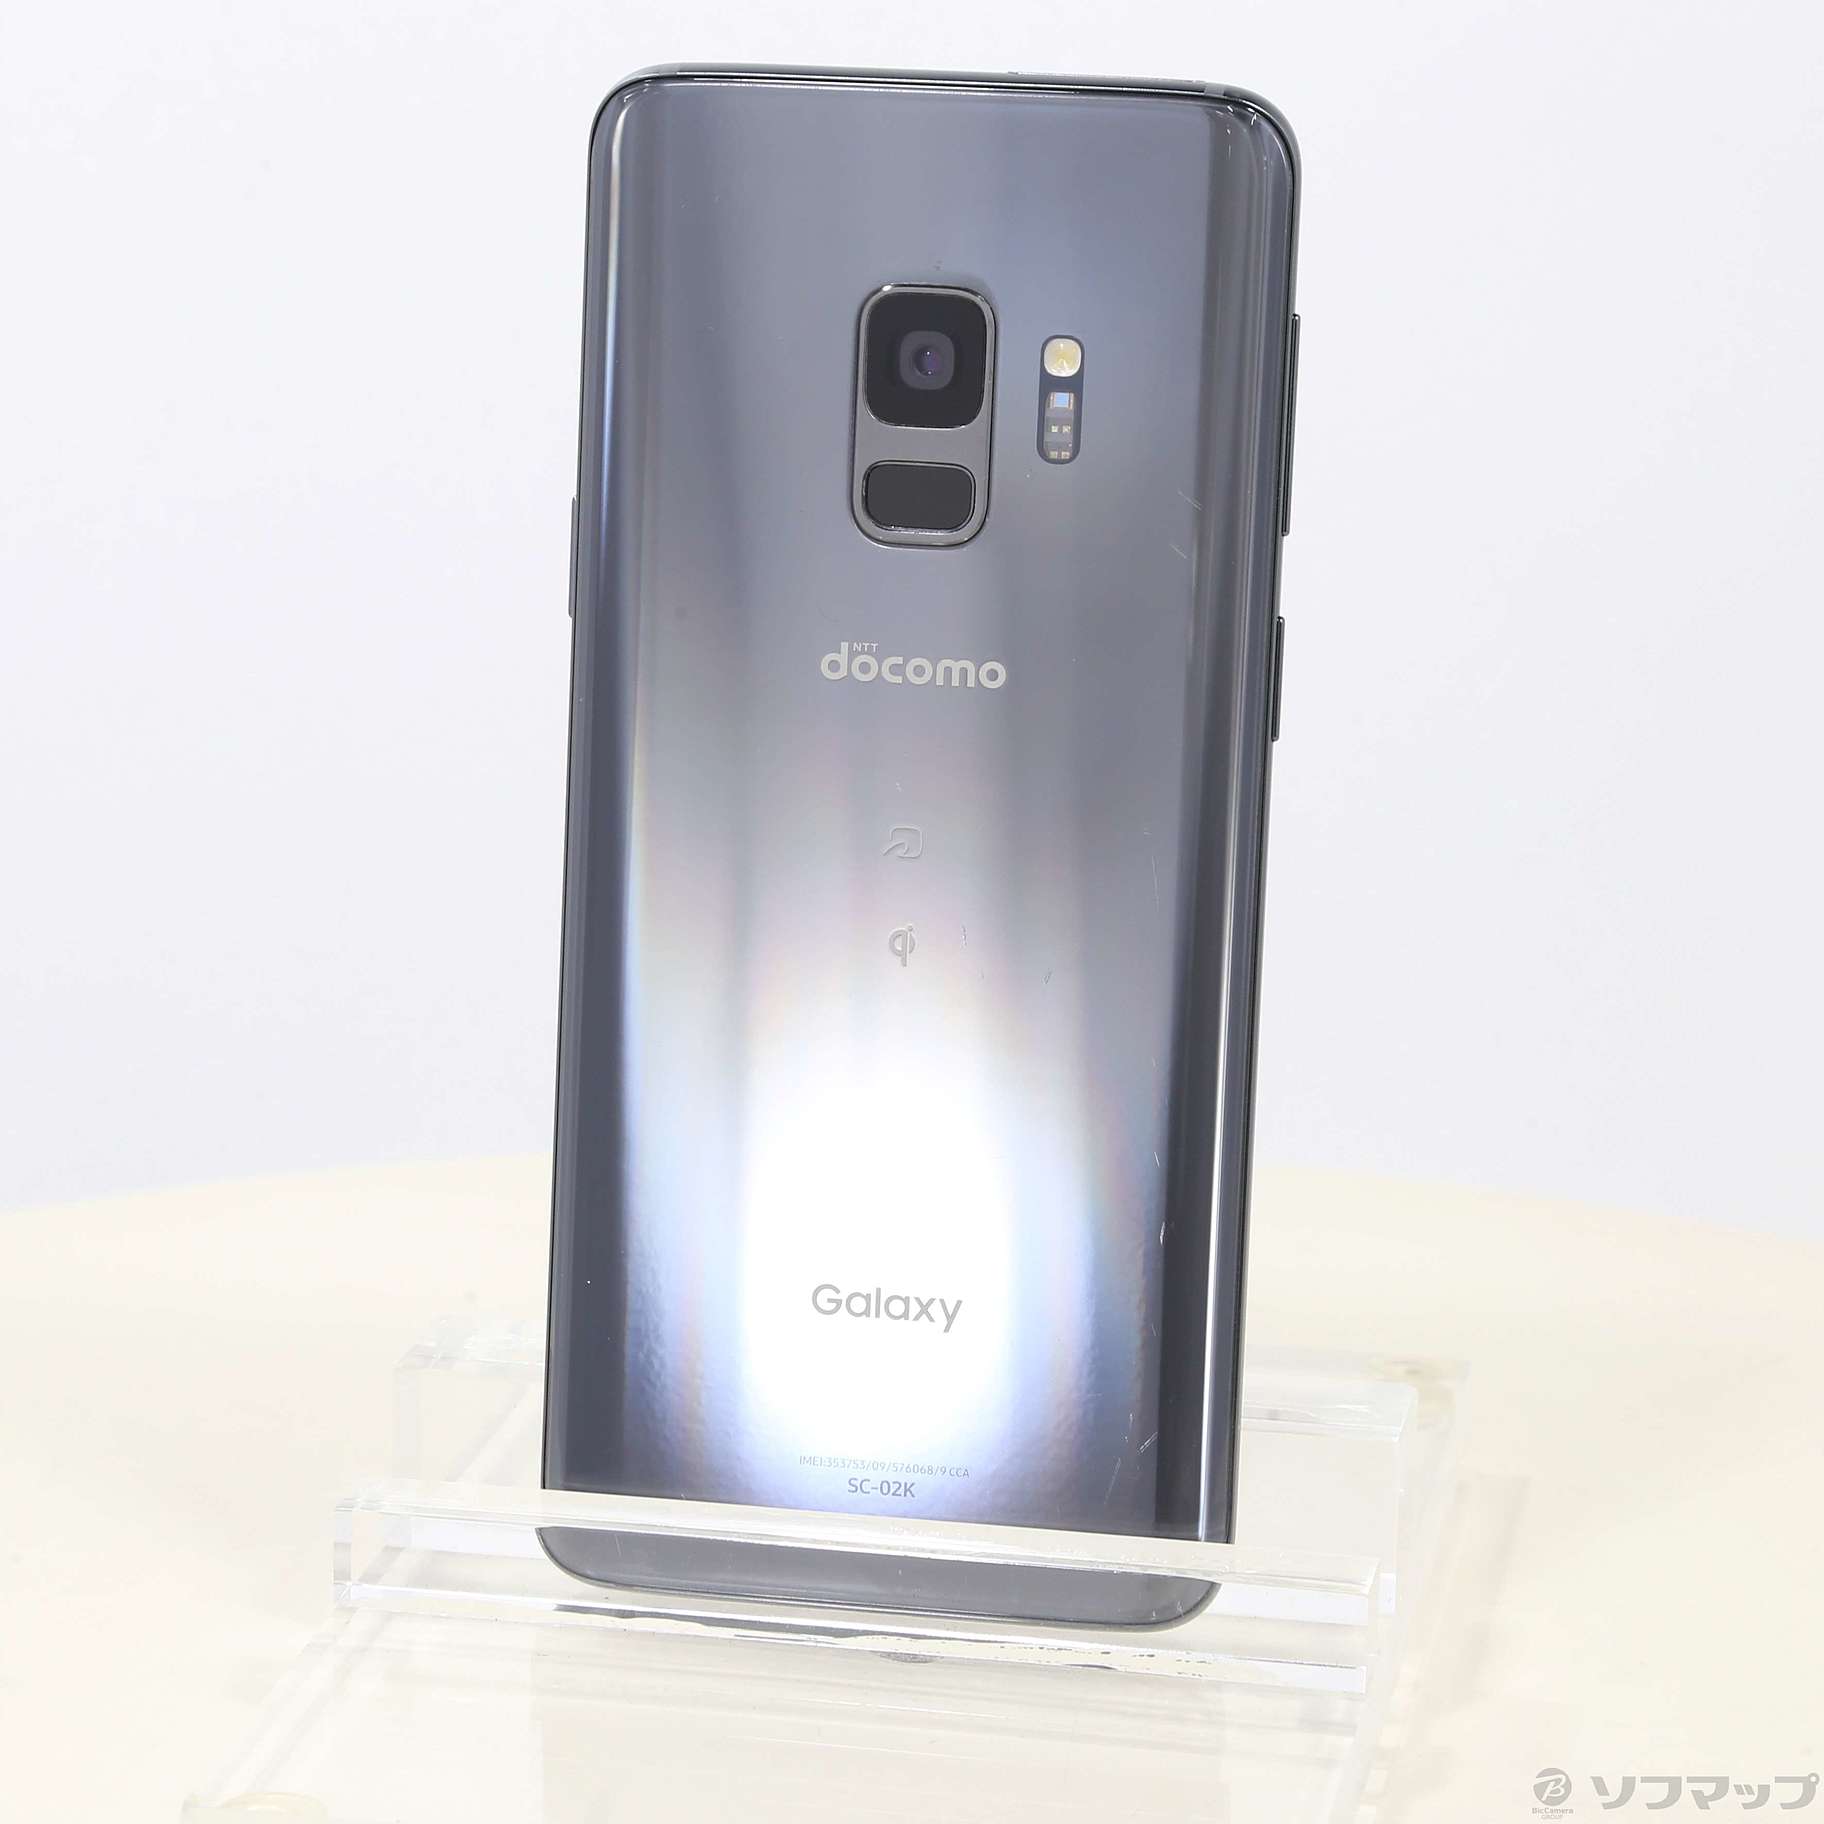 Galaxy S9 Titanium Gray 64 GB docomo